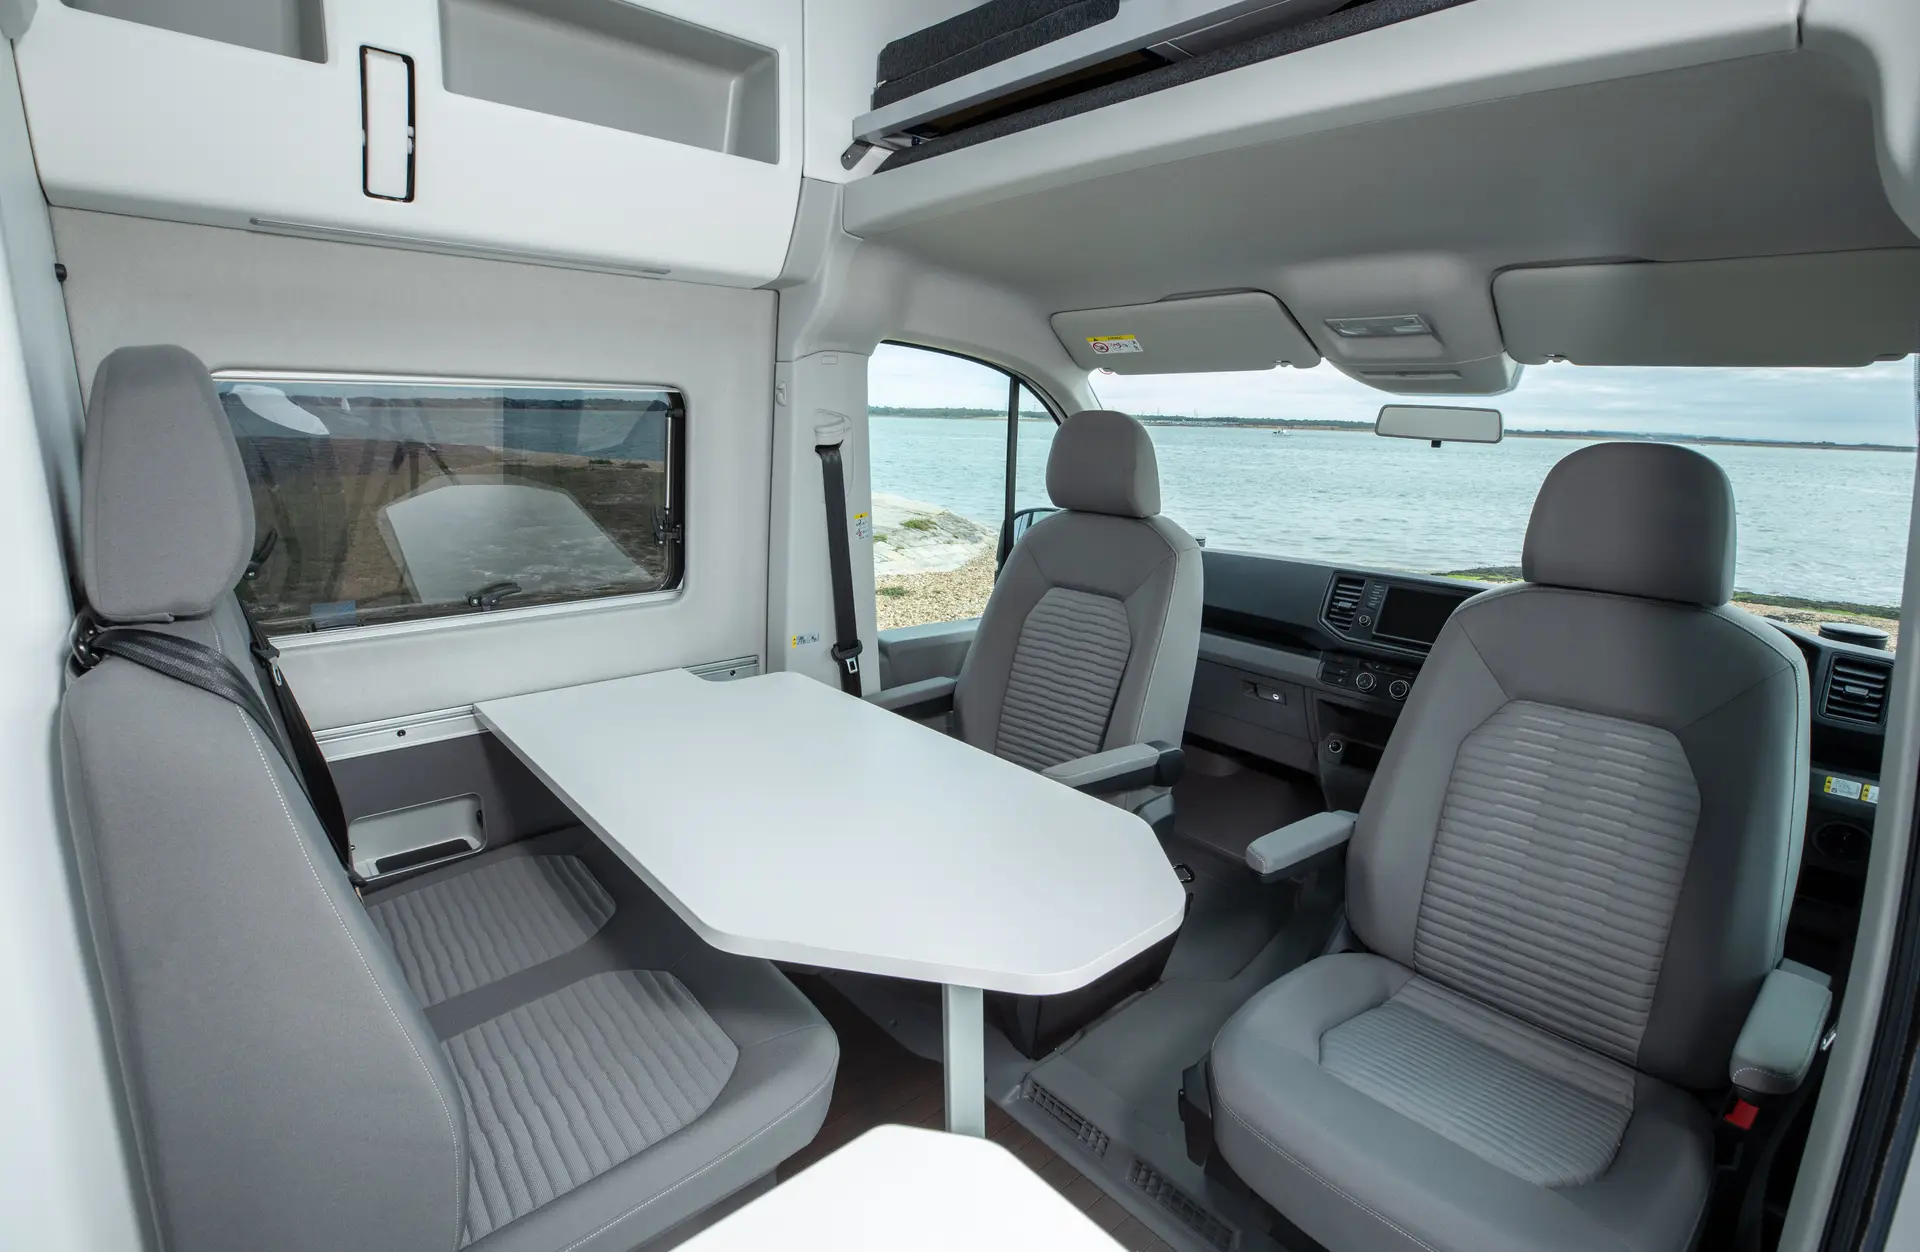 Volkswagen Grand California Review 2023: interior close up photo of the Volkswagen Grand California seating area